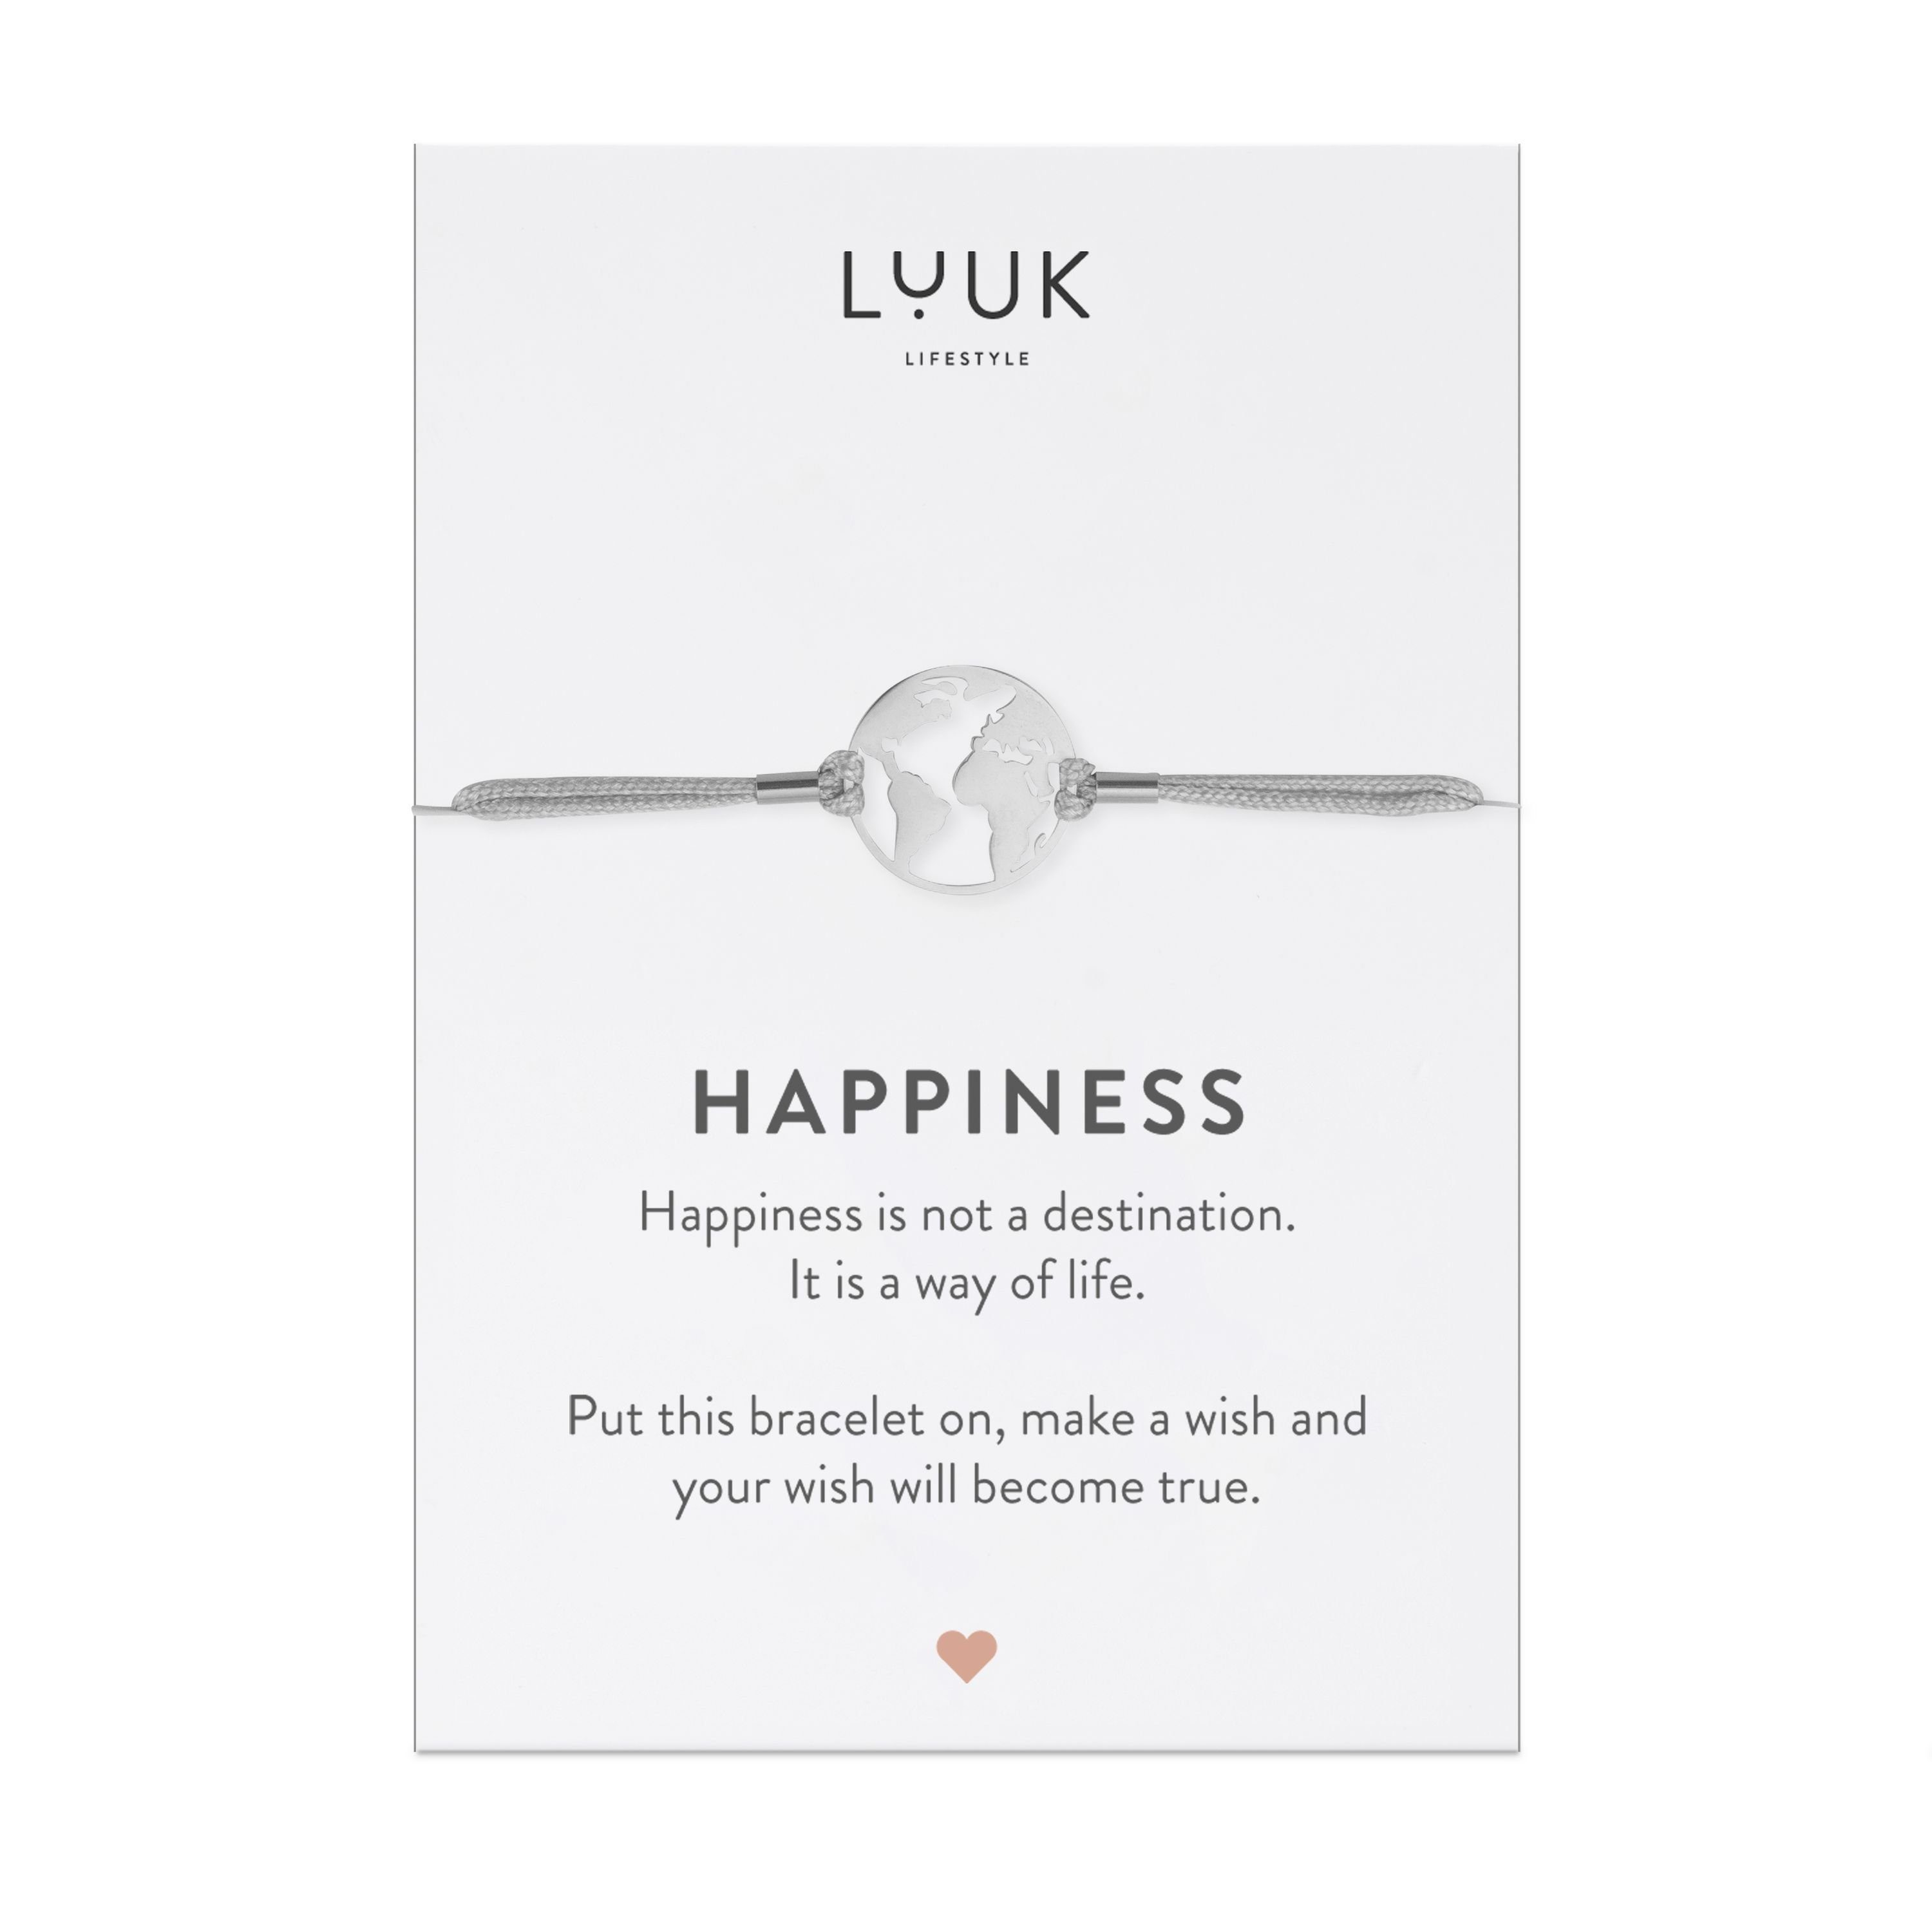 Silber Freundschaftsarmband Spruchkarte handmade, mit Happiness LUUK Weltkugel, LIFESTYLE